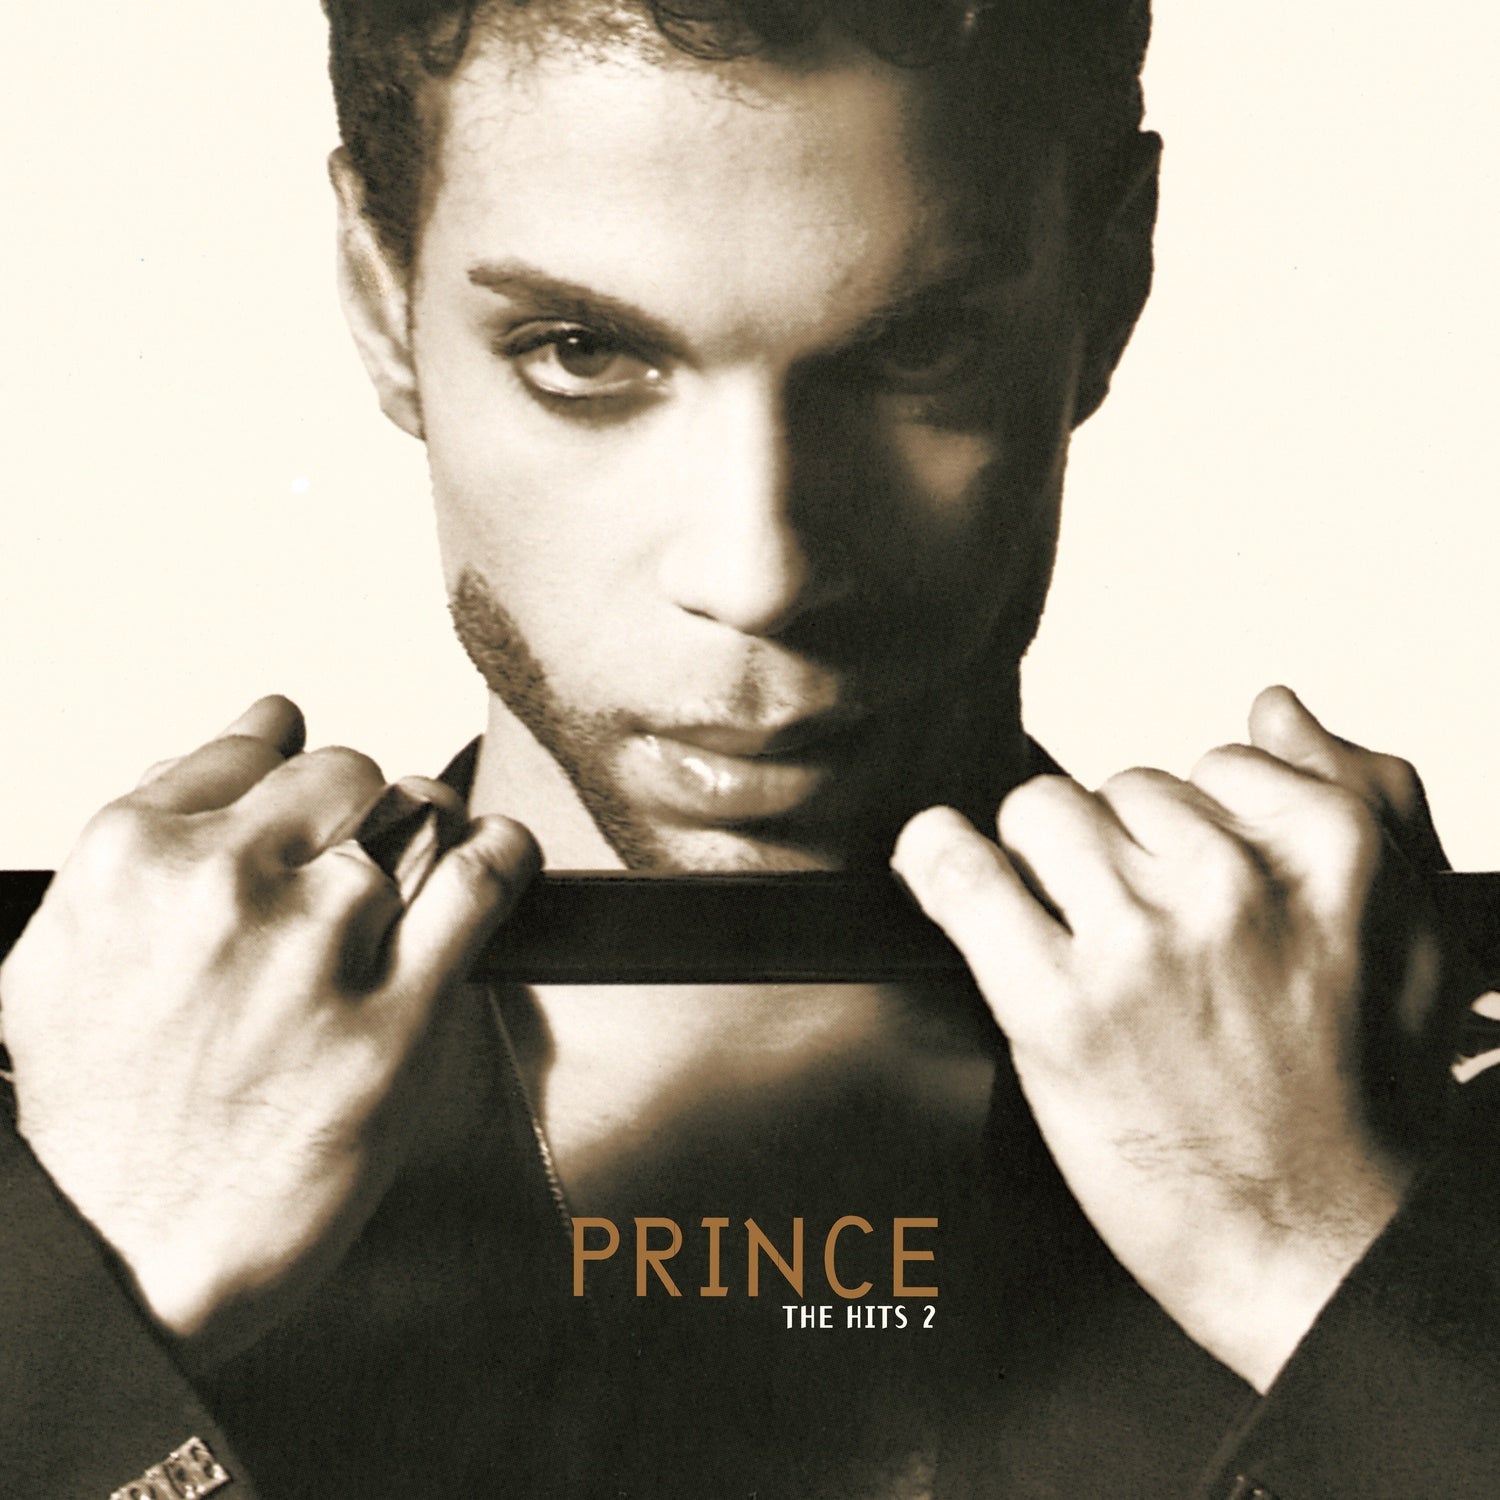 Prince – The Hits 2 - New 2 LP Record 2022 Warner Europe Vinyl - Rock / Pop